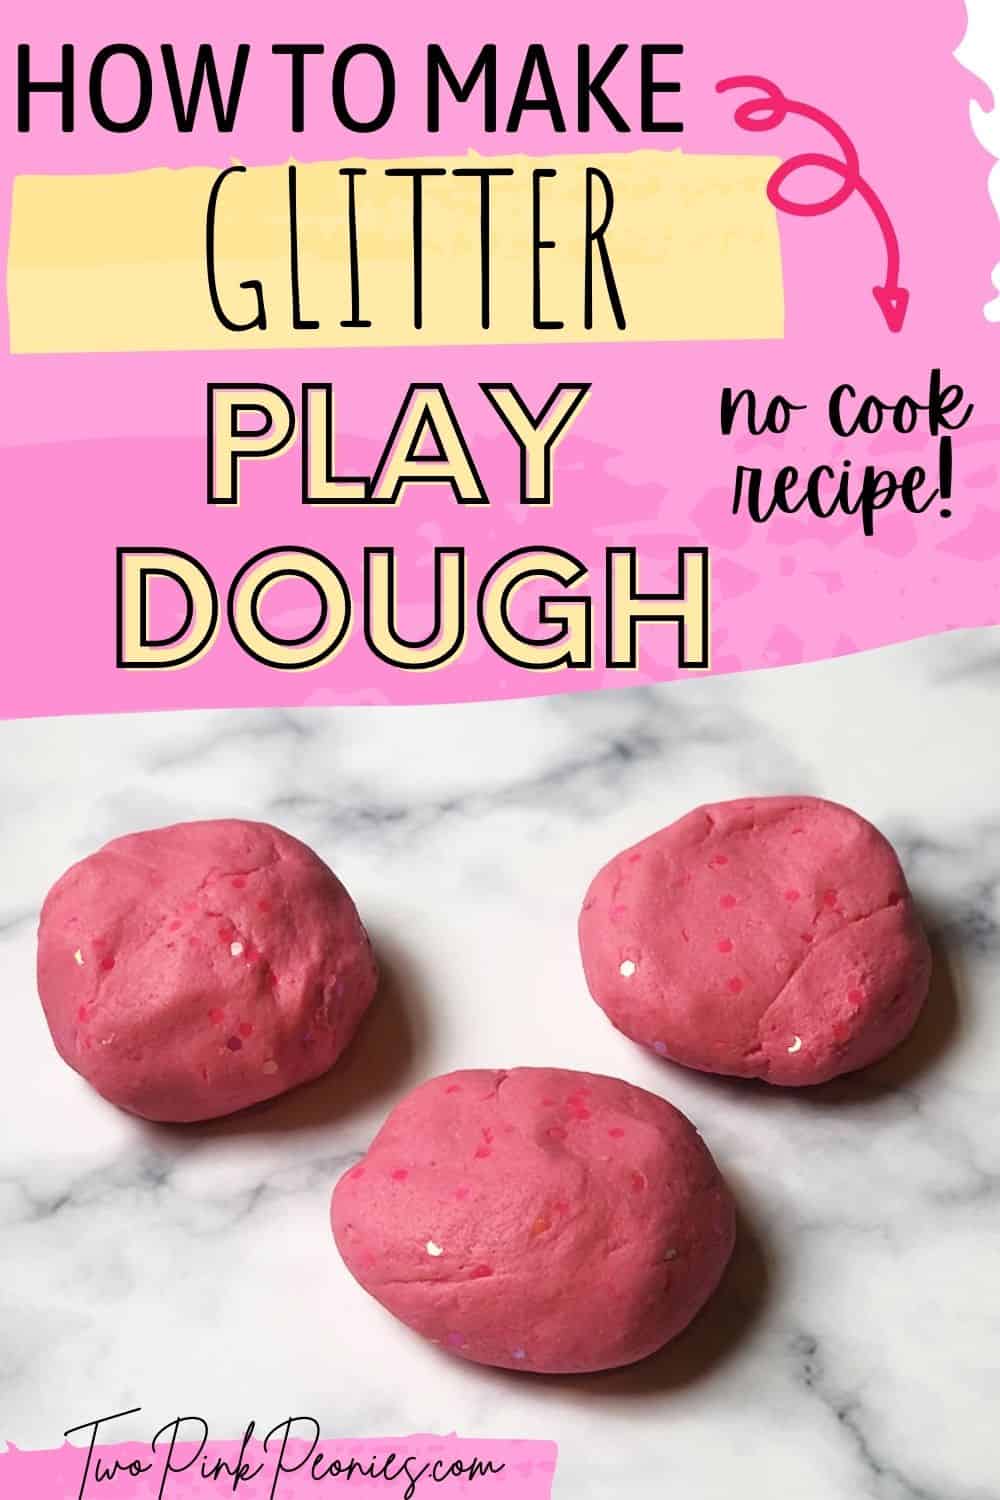 play dough with glitter recipe